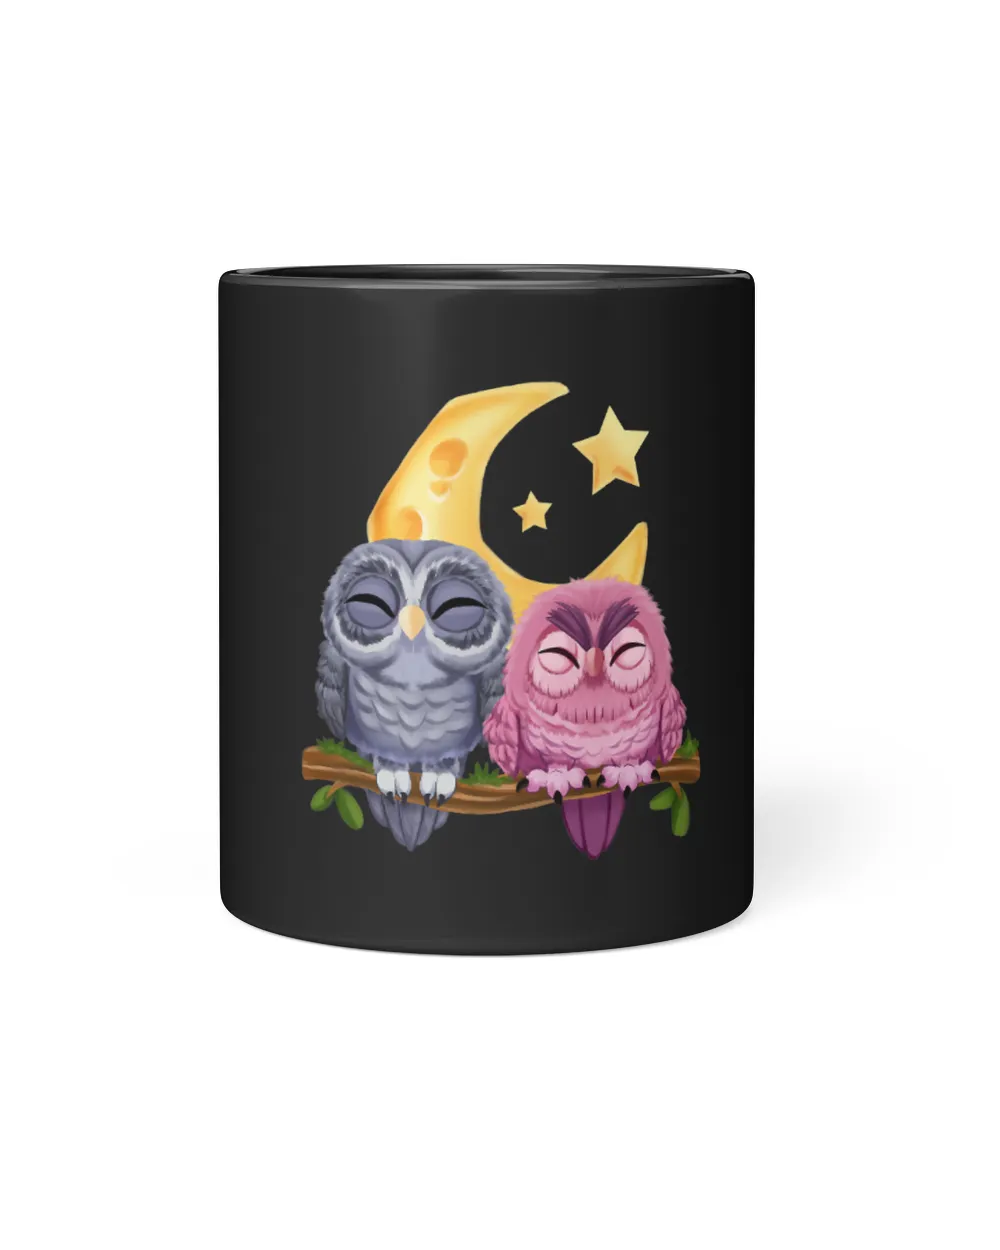 Cute Owl Boyfriend And Girlfriend Moon